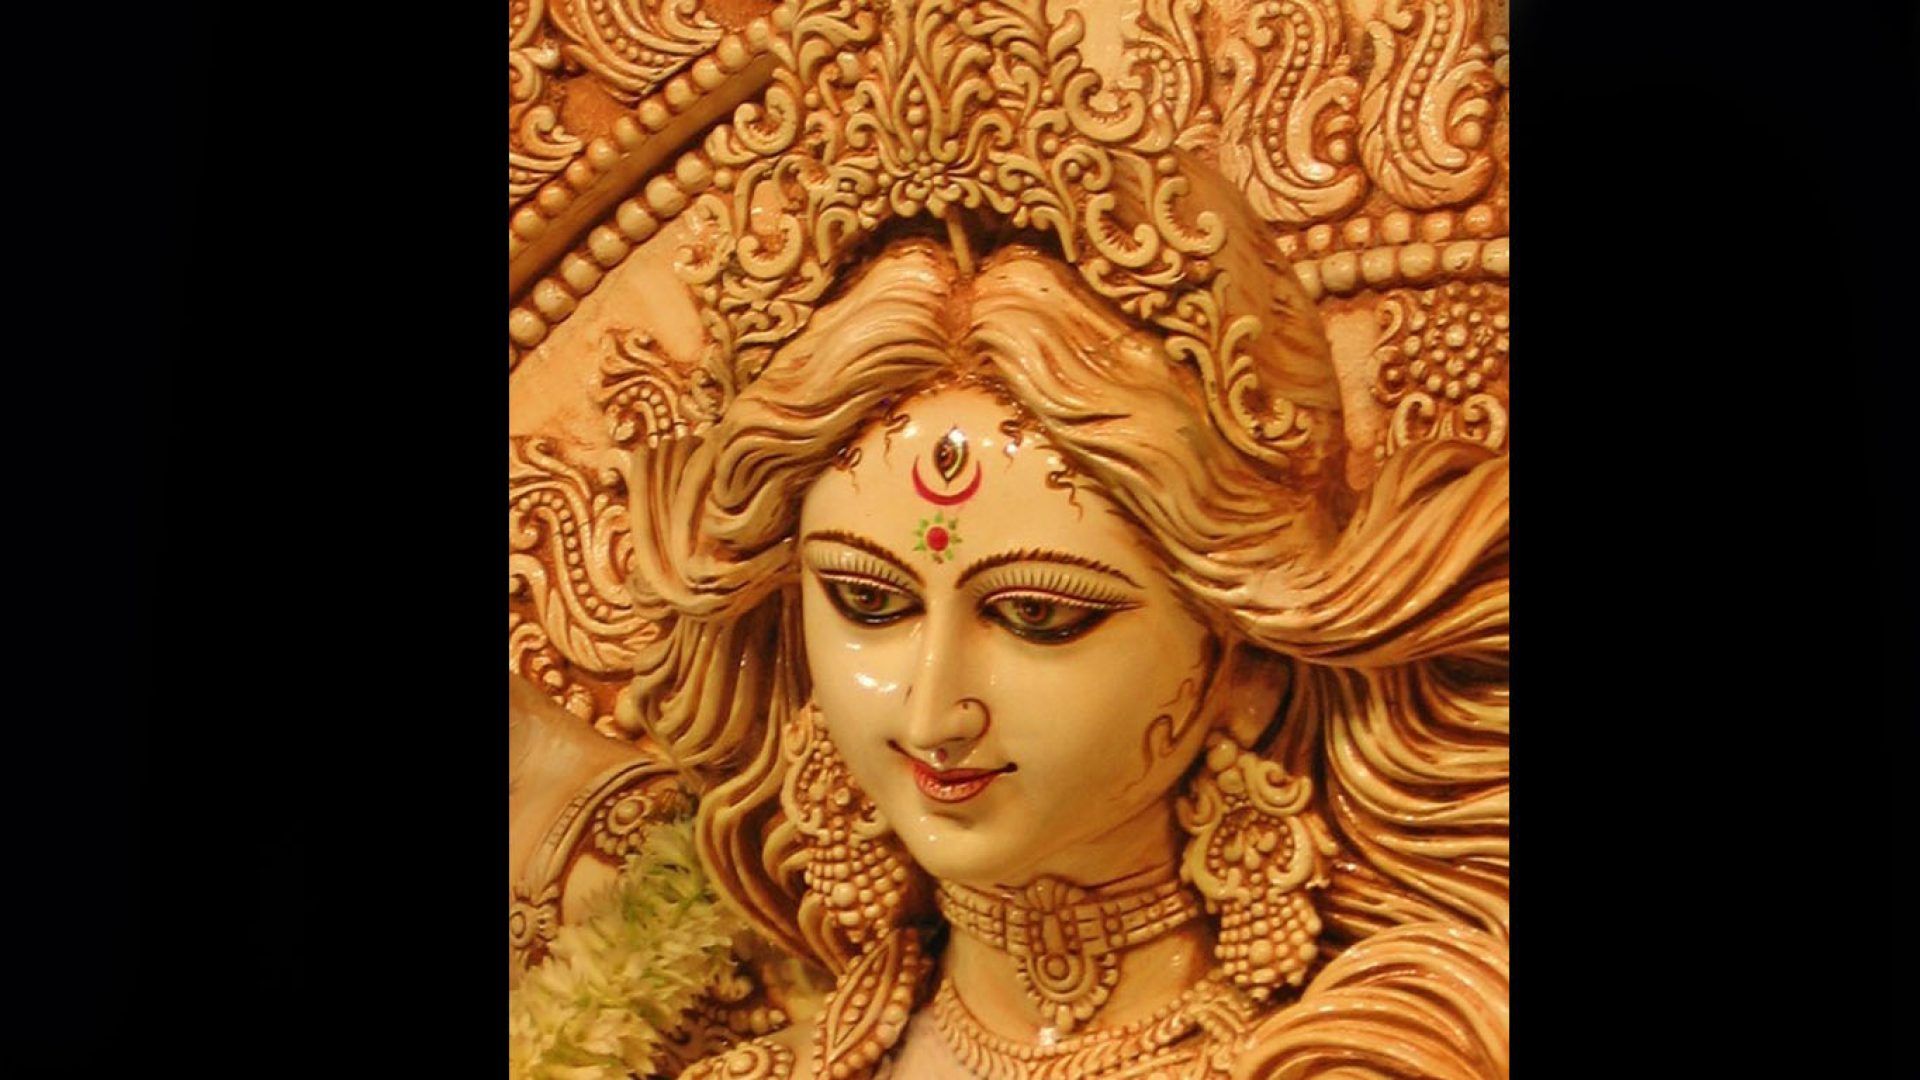 Maa Durga Face 3D HD Image. Goddess Maa Durga